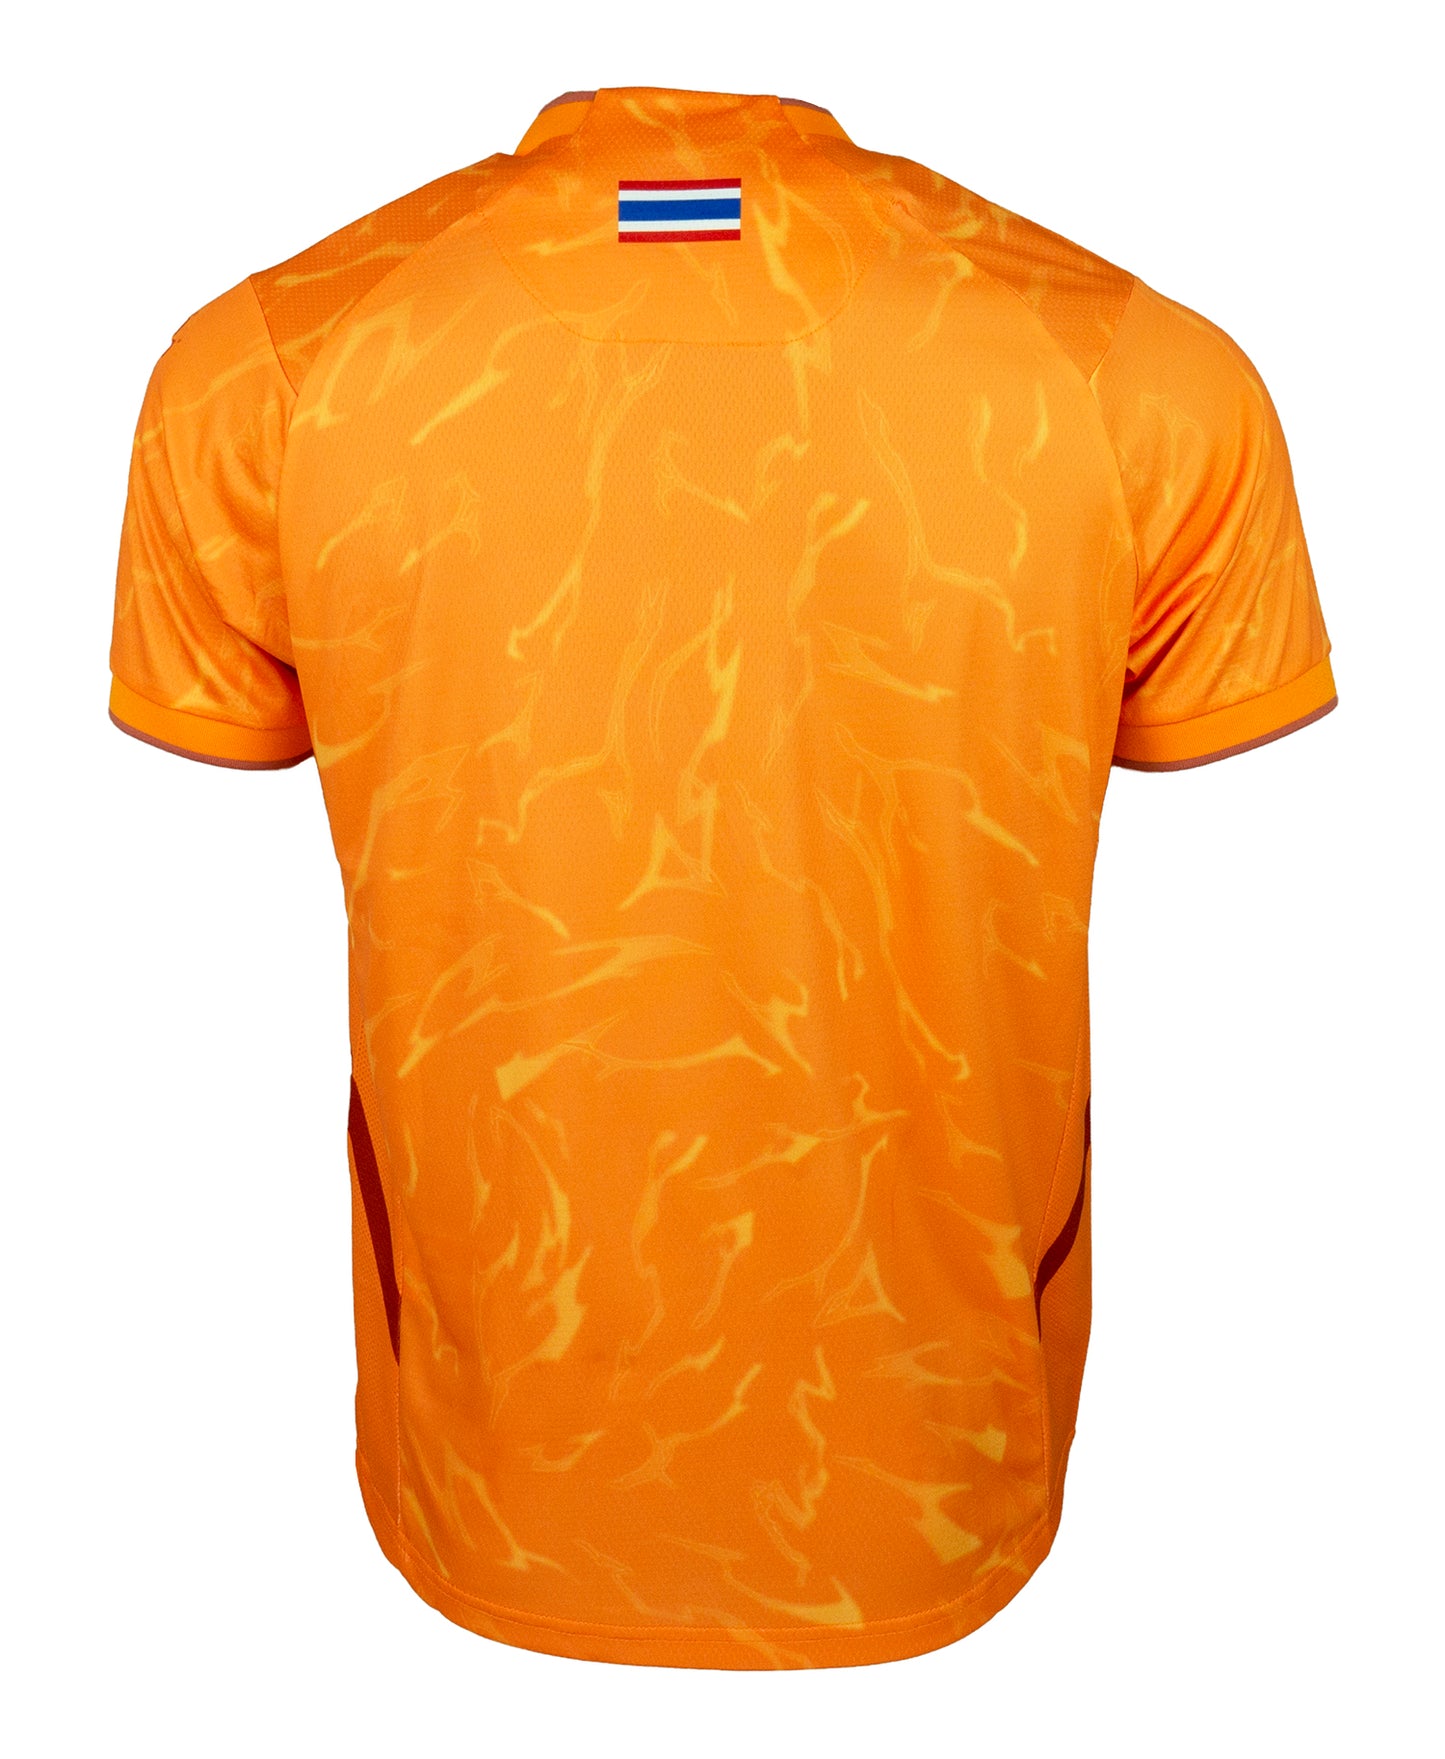 Burinam GK Jersey 23/24 season Orange